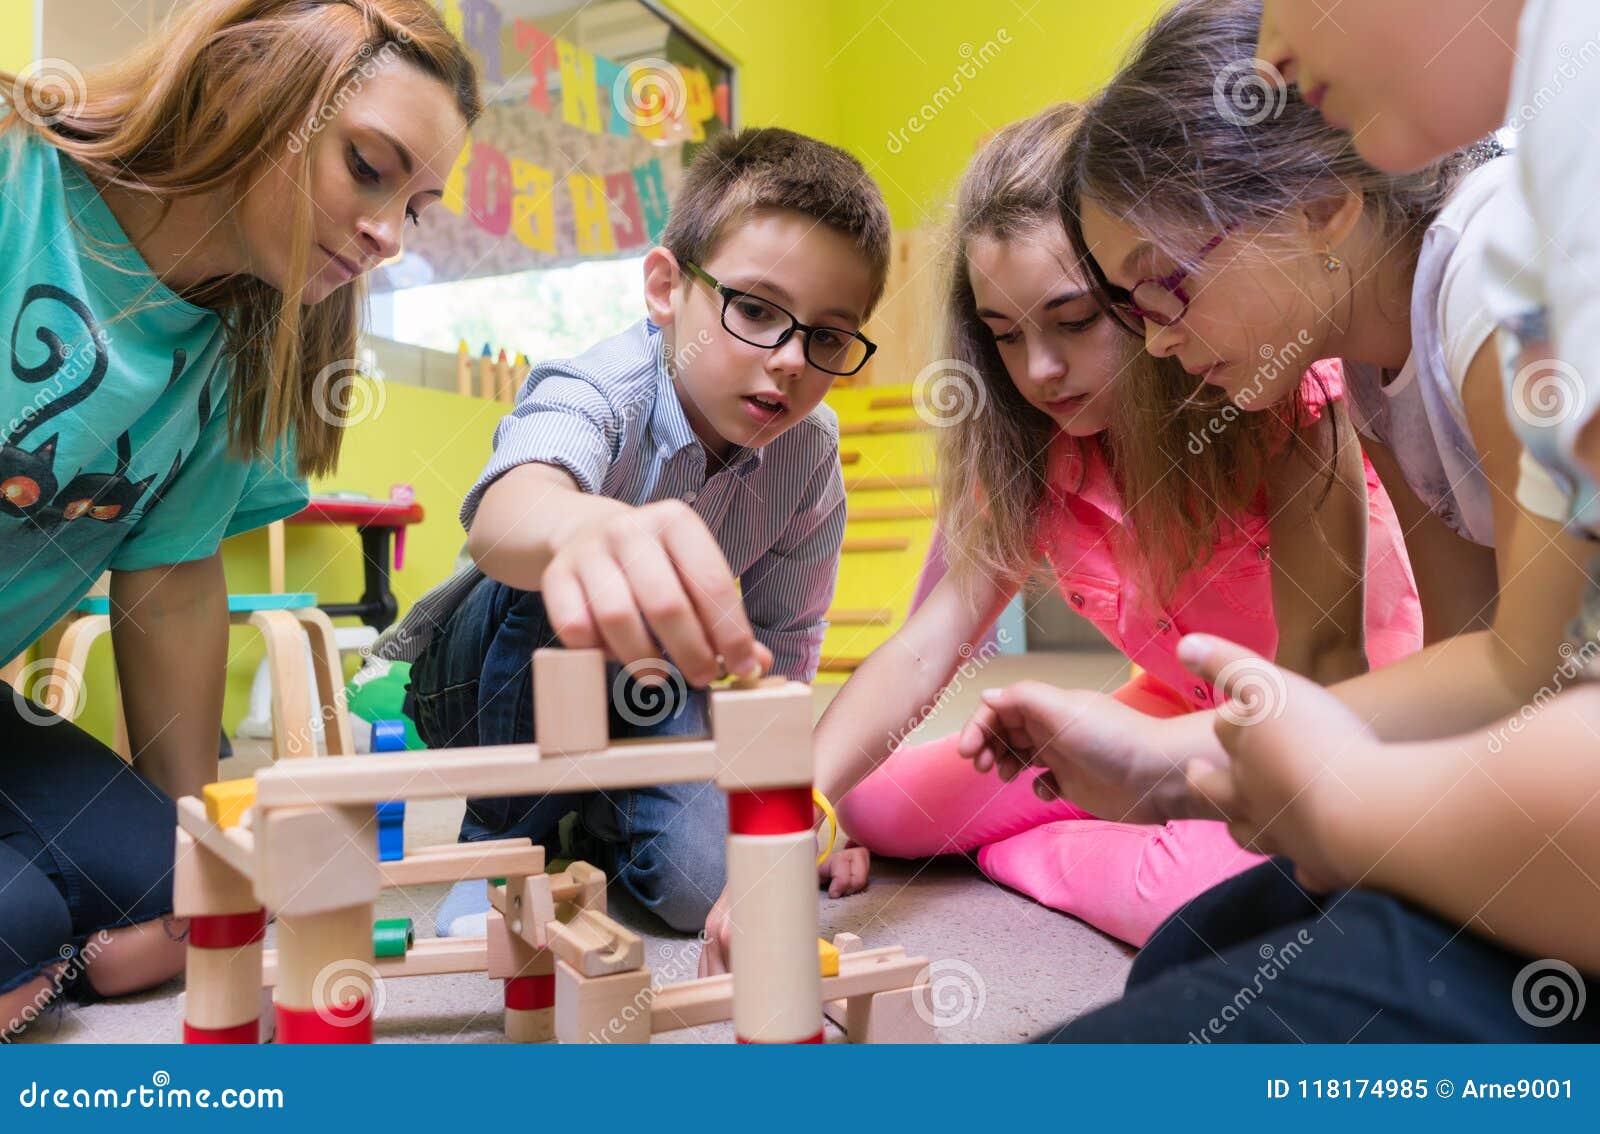 dedicated kindergarten teacher helping children with the construction of a train